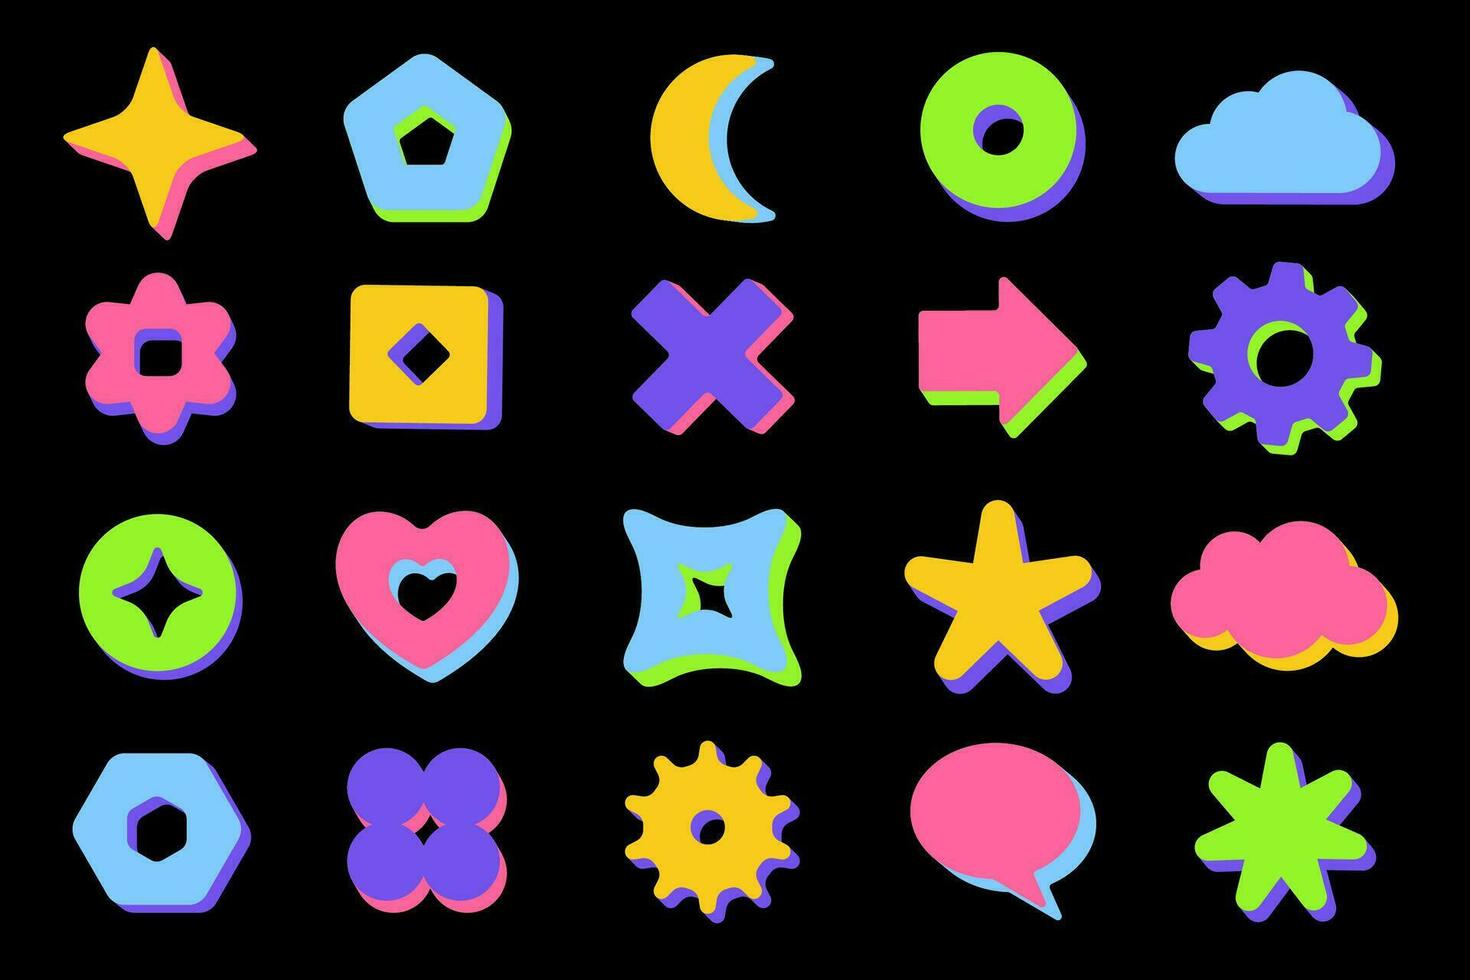 Retro geometric shapes vector set. Trendy design element for banner, prints, stickers.